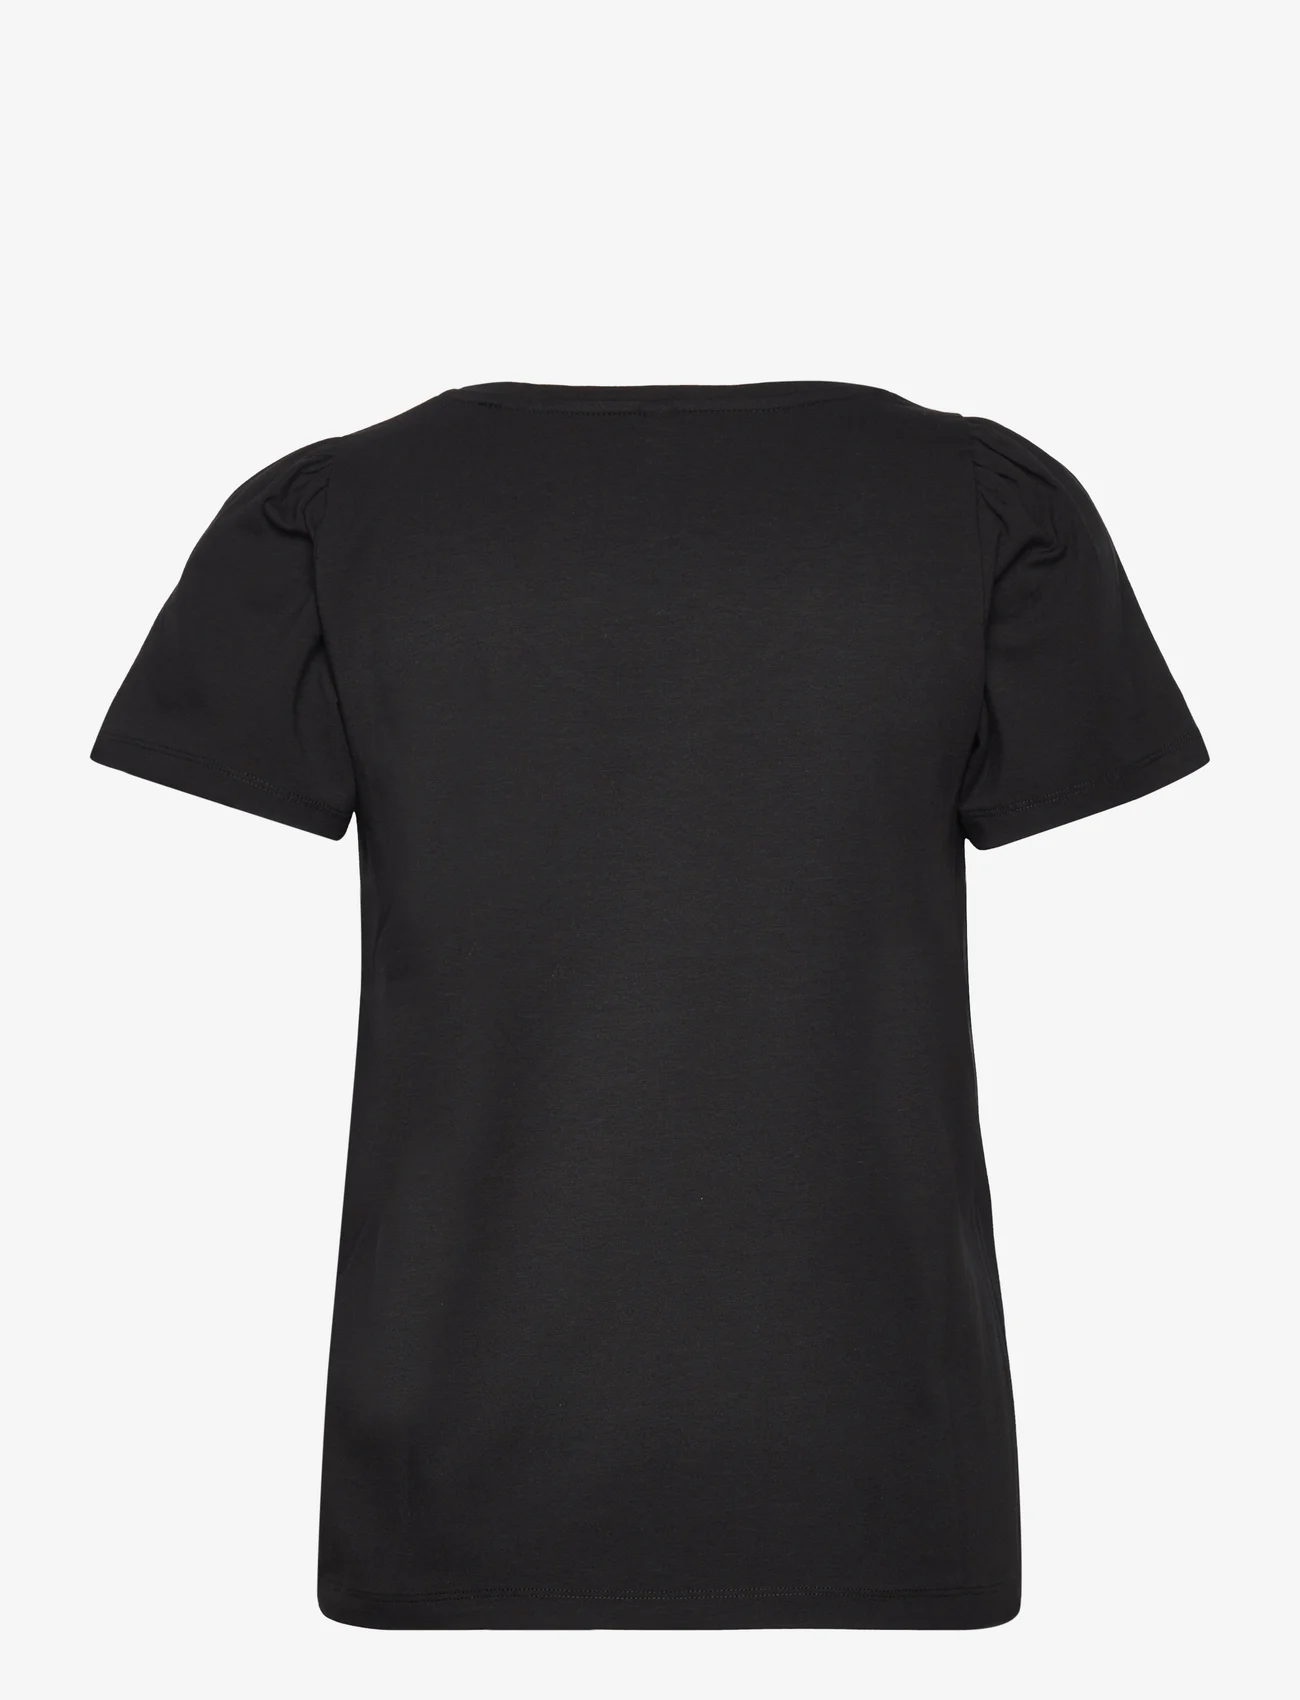 Culture - CUgith V-neck T-Shirt - black - 1